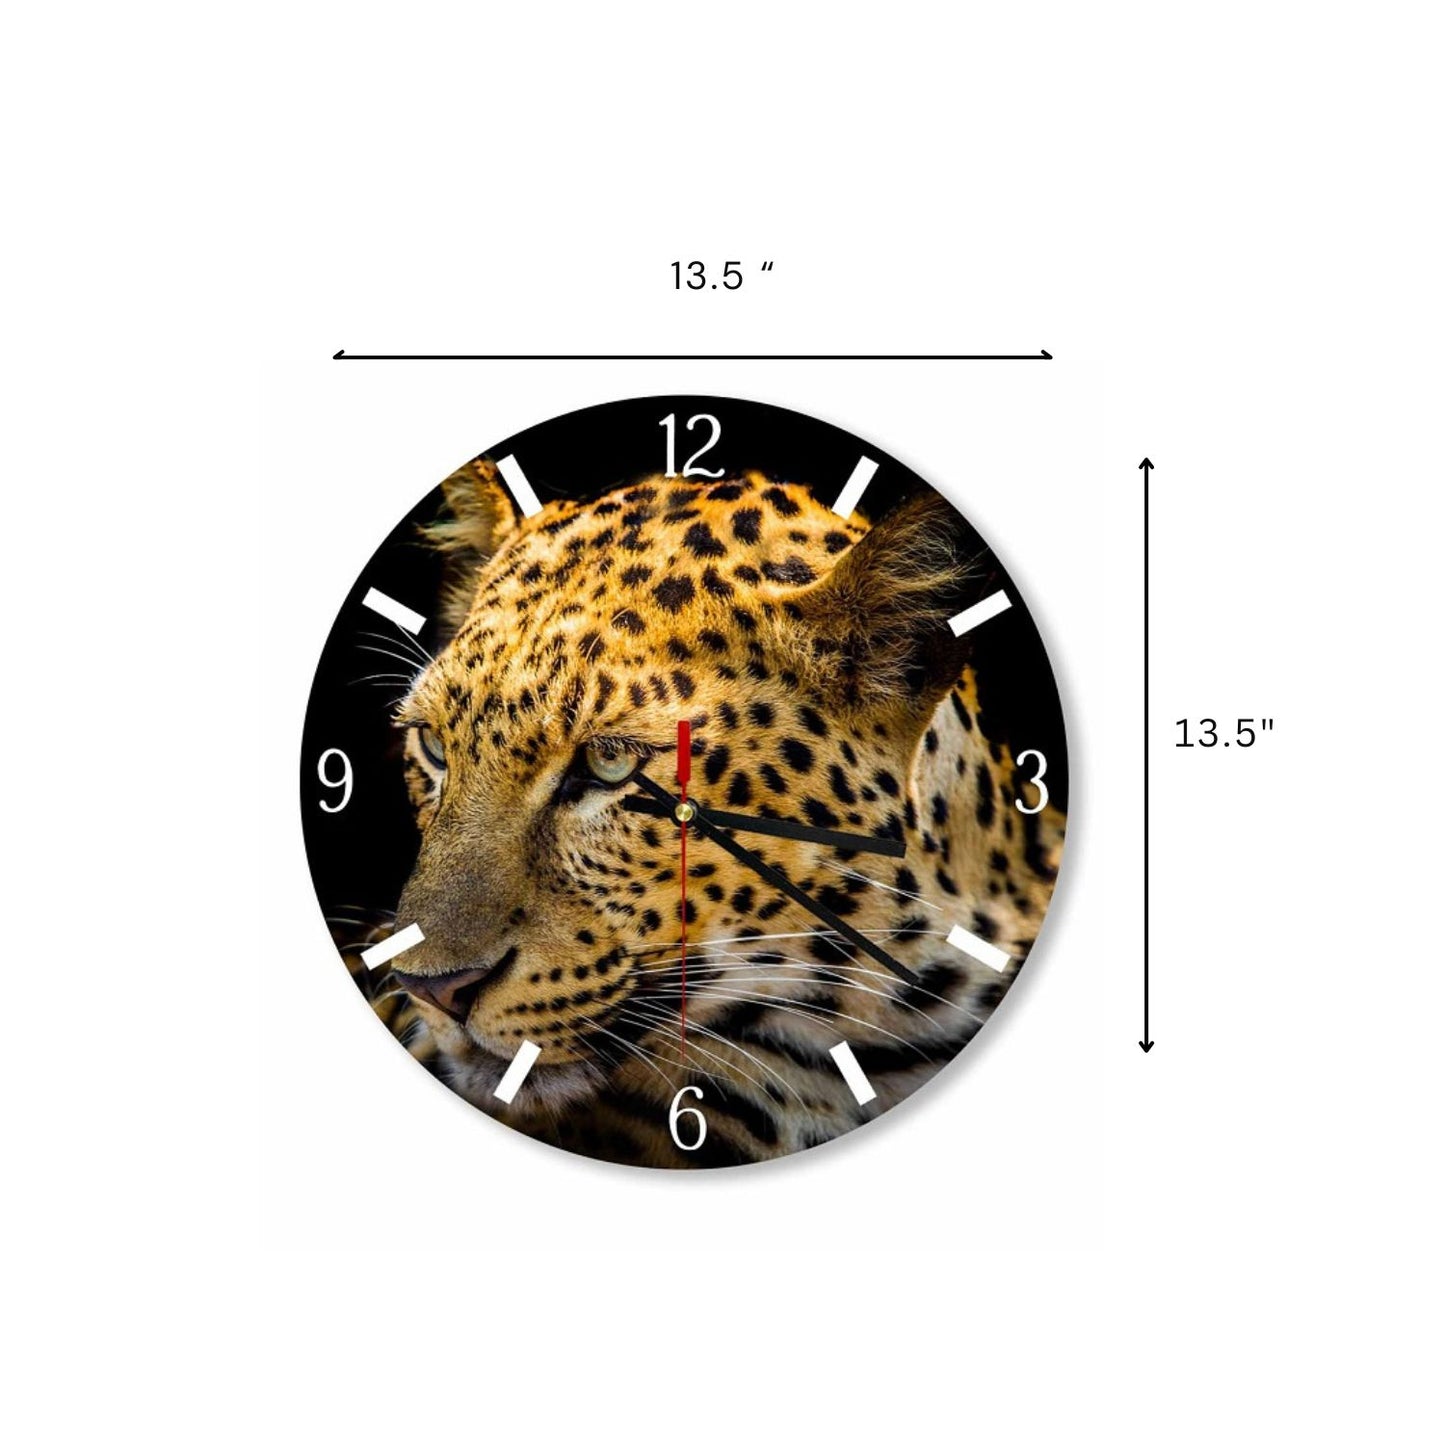 Leopard Round  Wall Clock